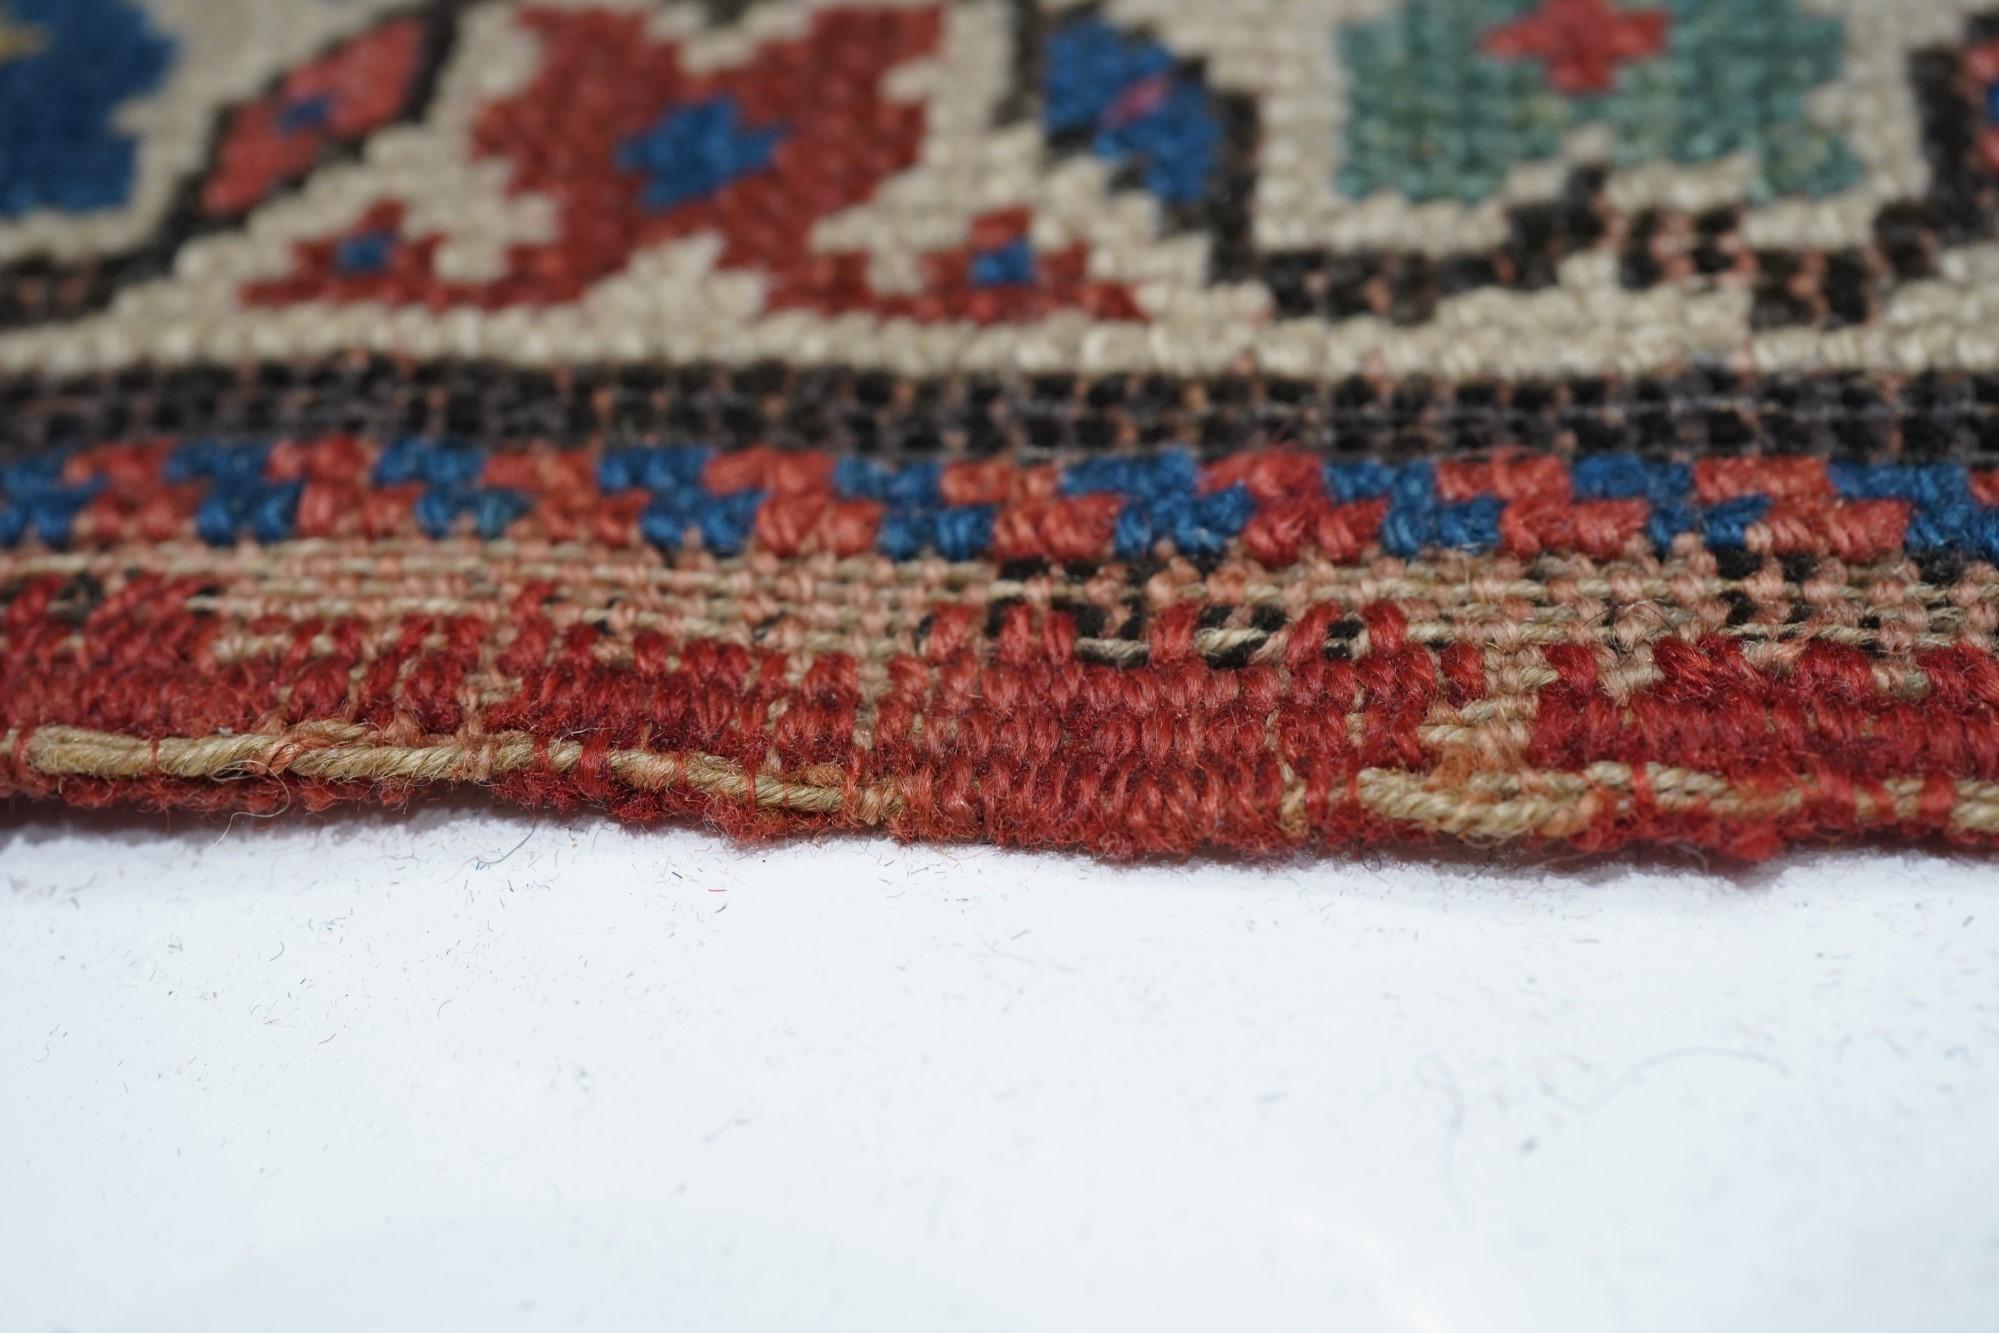 Late 19th Century Antique Kazak Rug For Sale